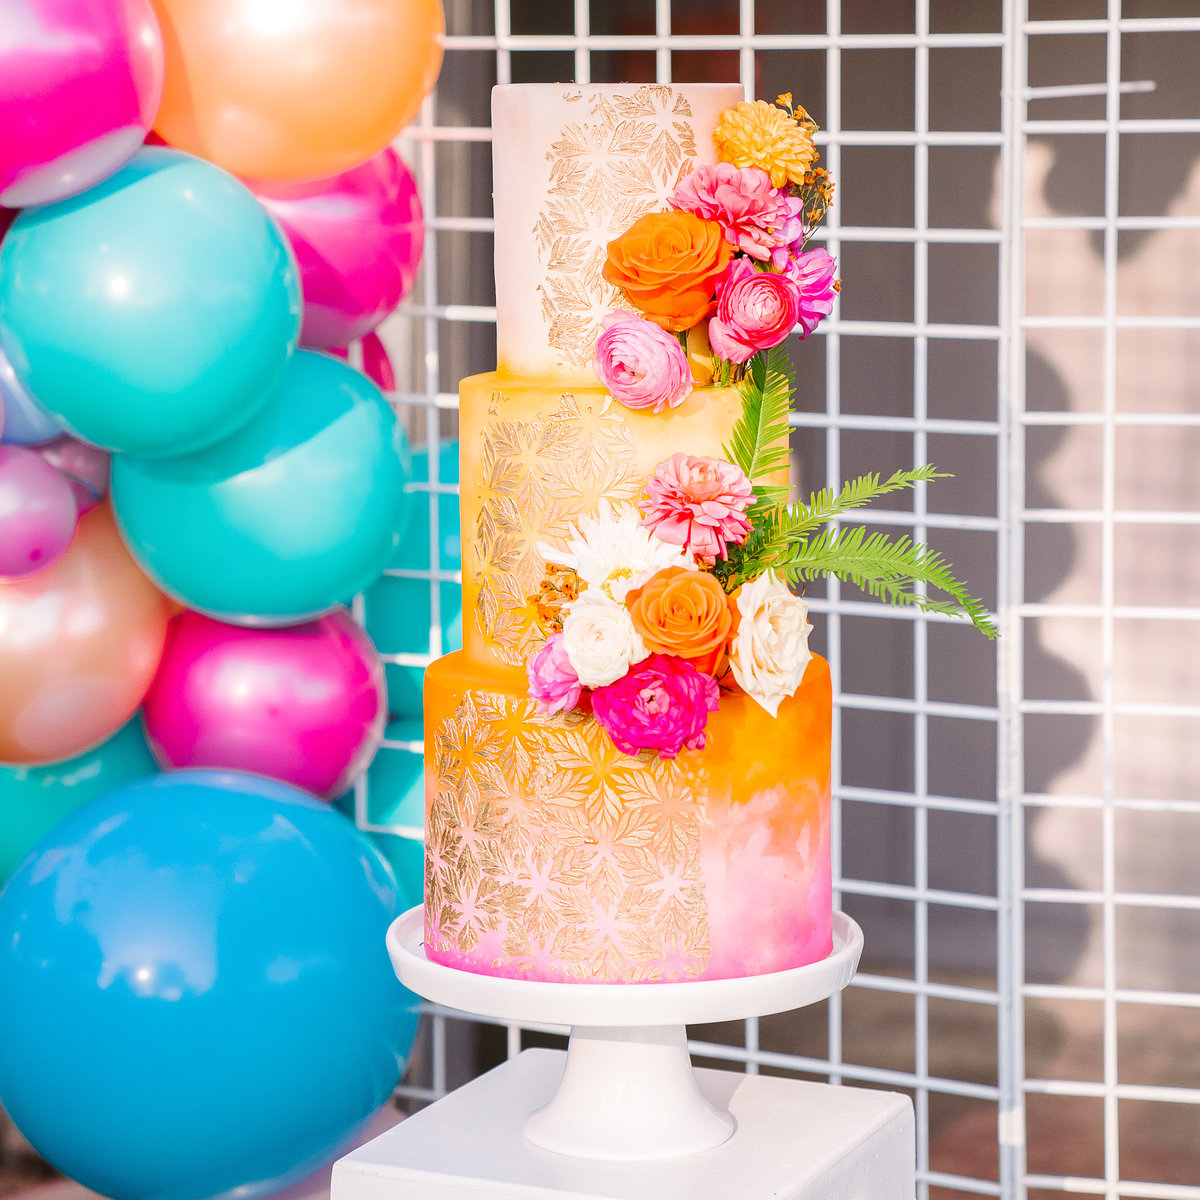 kalamazoo-tropical-wedding-cake